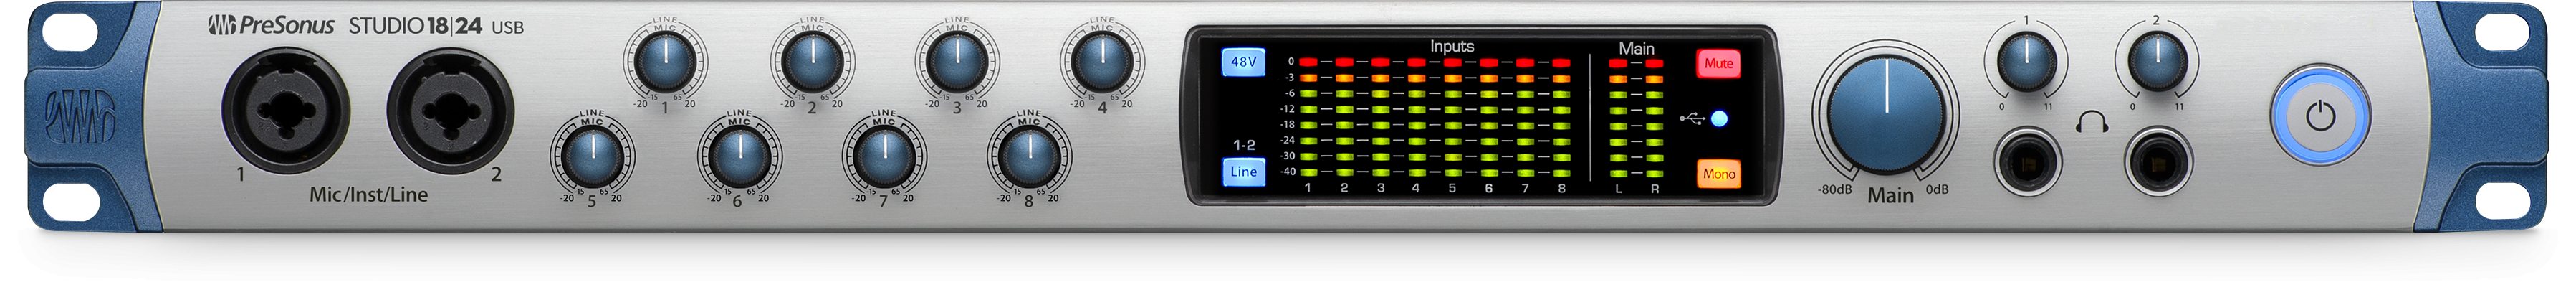 PreSonus Studio 1824 USB Audio Interface